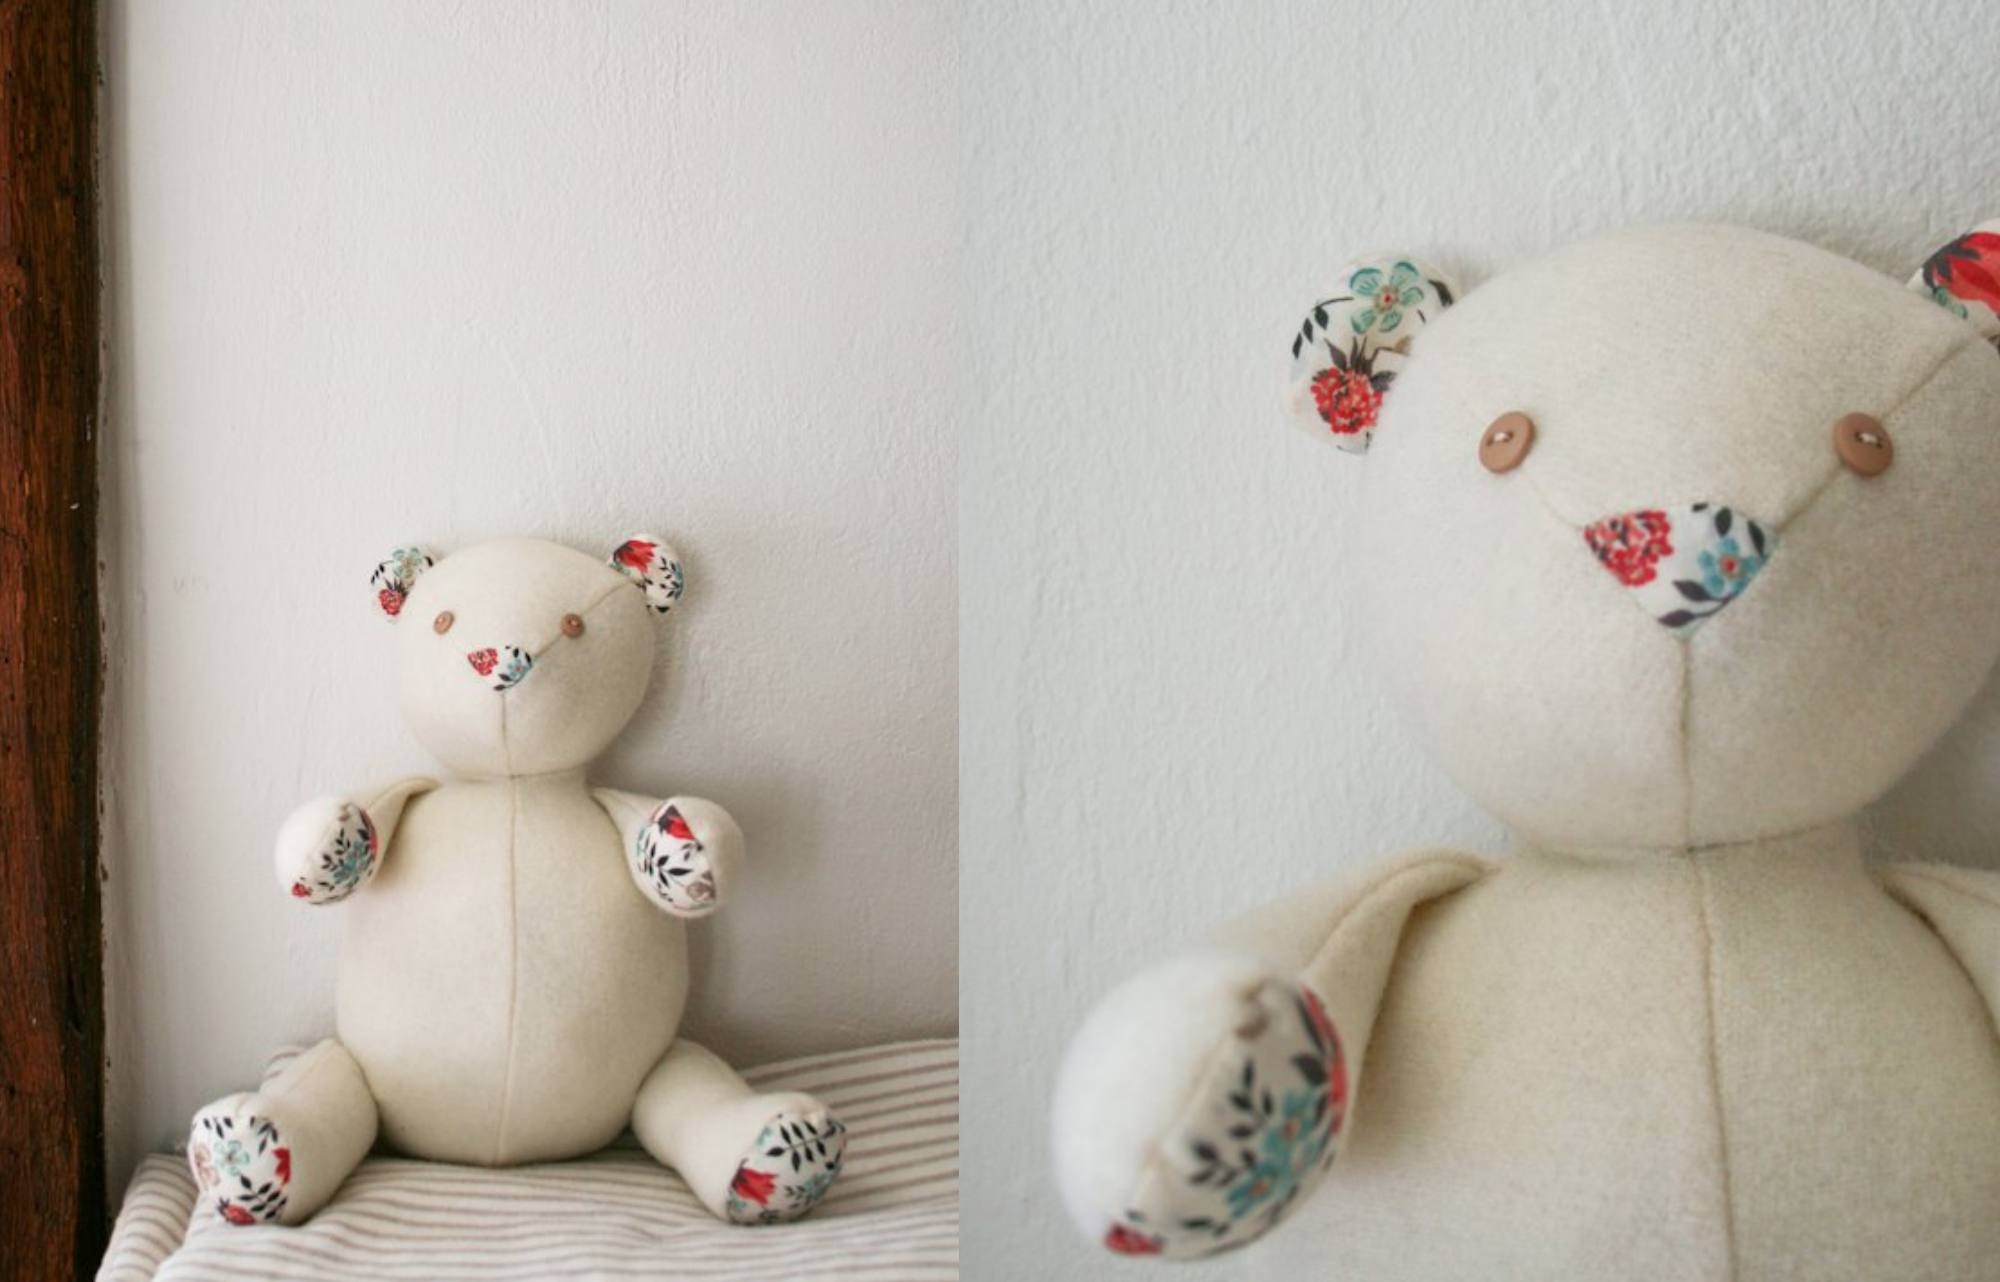 10 Adorable Teddy Bear Sewing Patterns - Free Teddy Bear Patterns Printable